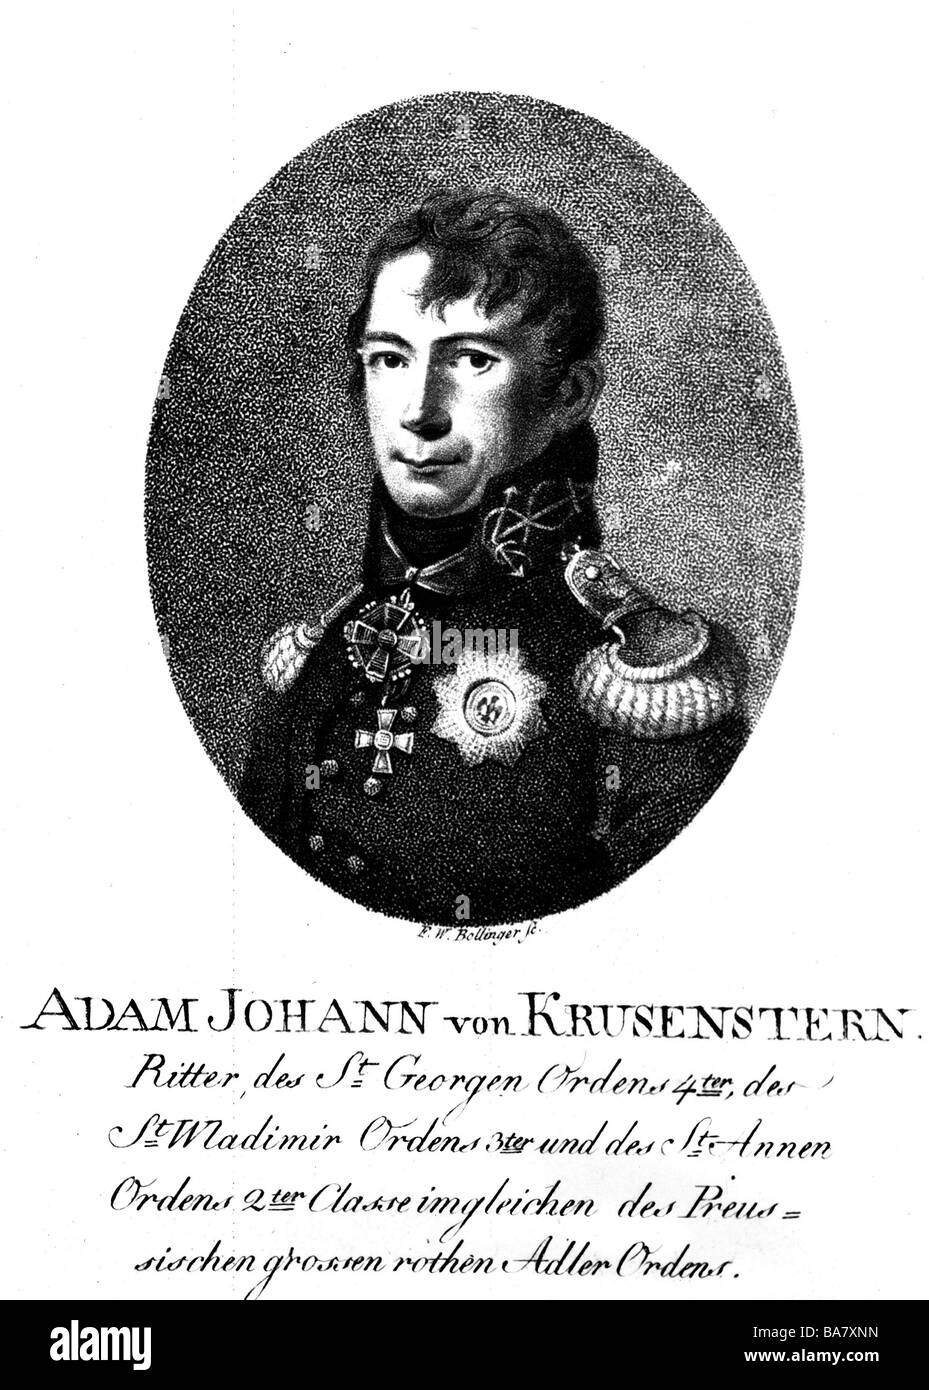 Krusenstern, Adam Johann von (Russian: Ivan Fedorovich Kruzenshtern), 19.11.1770 - 24.8.1846, Russian naval explorer of German origin, portrait, Stock Photo